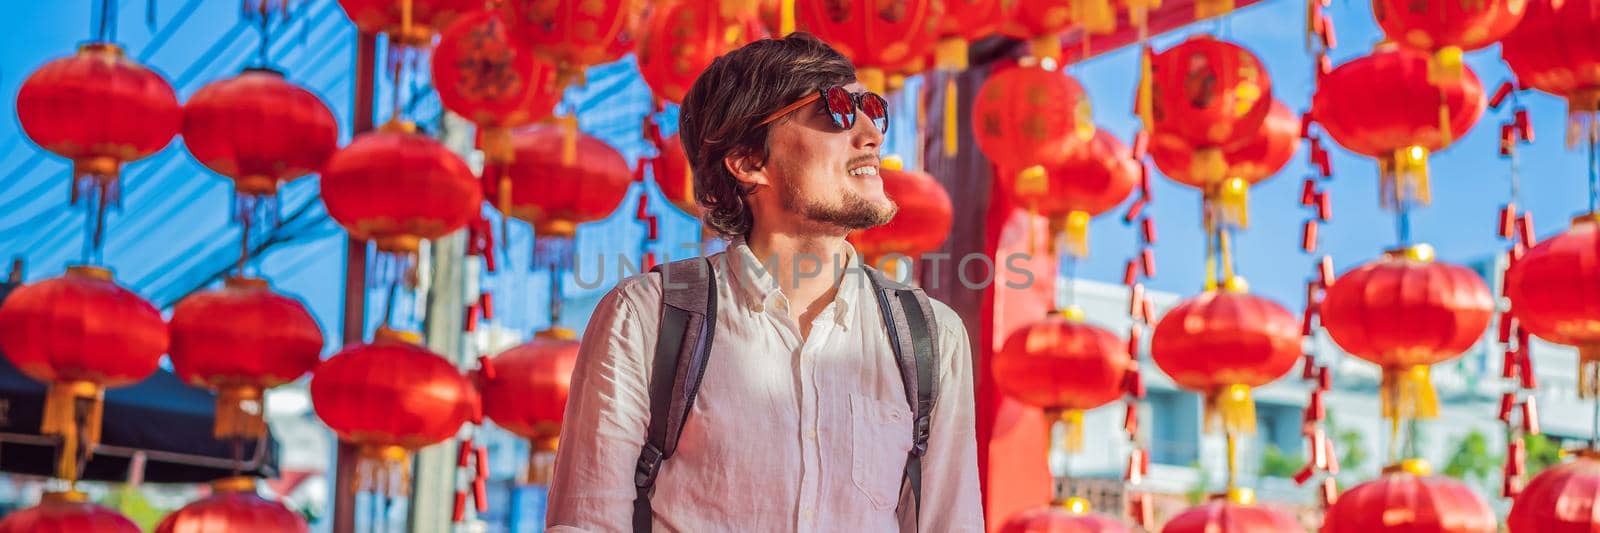 Man celebrate Chinese New Year look at Chinese red lanterns. Chinese lanterns. BANNER, LONG FORMAT